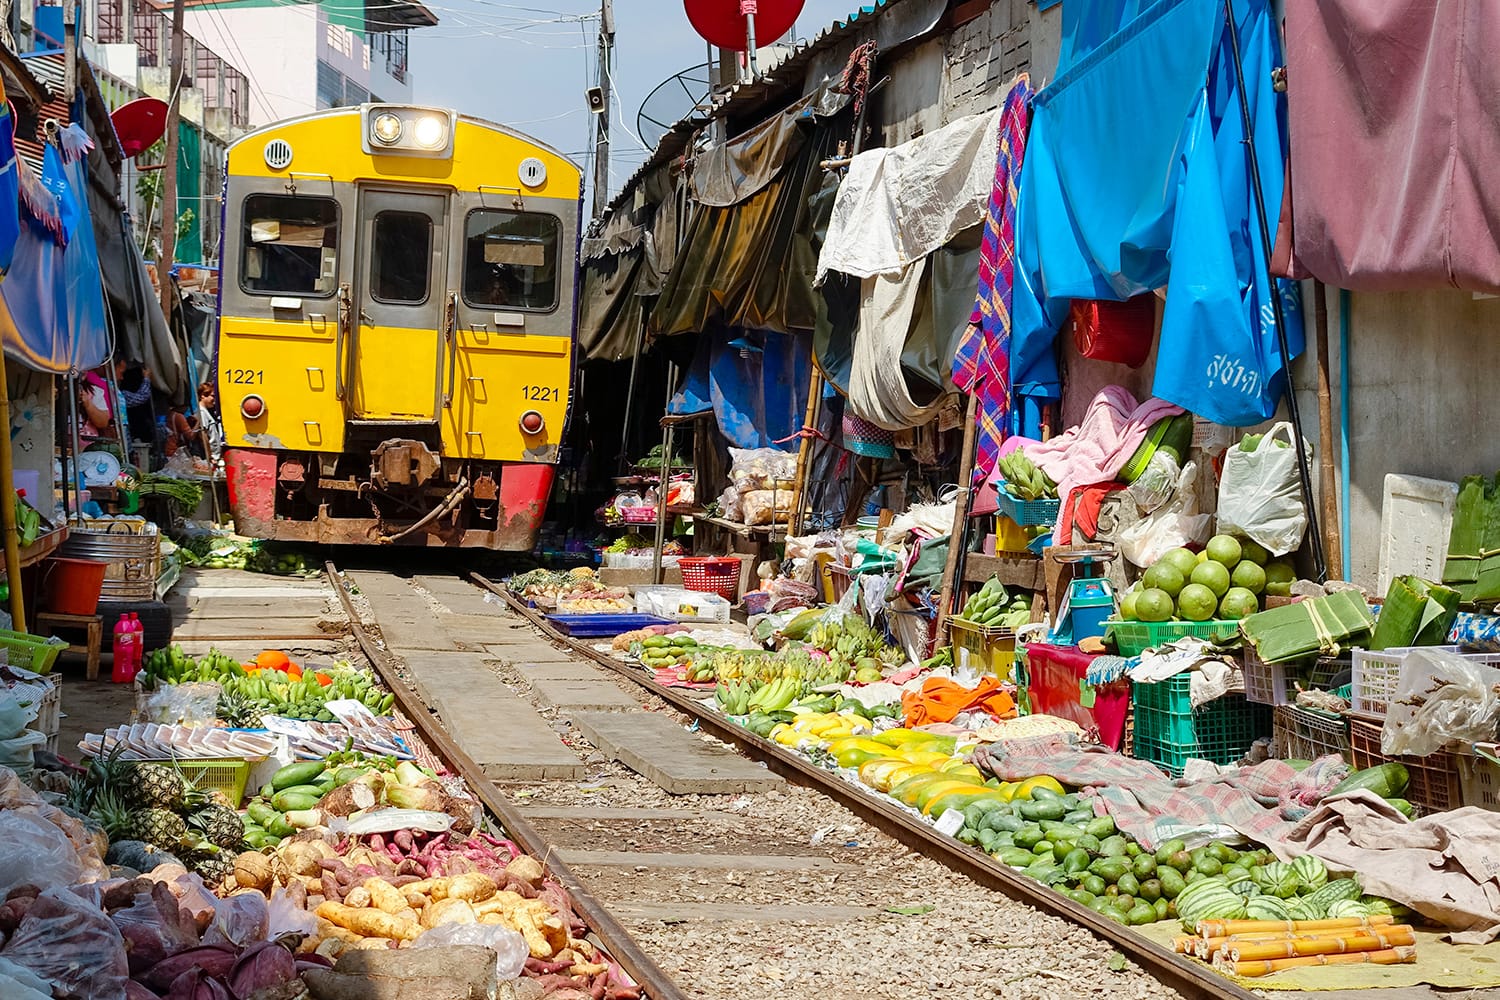 Maeklong Railway Market in Thailand